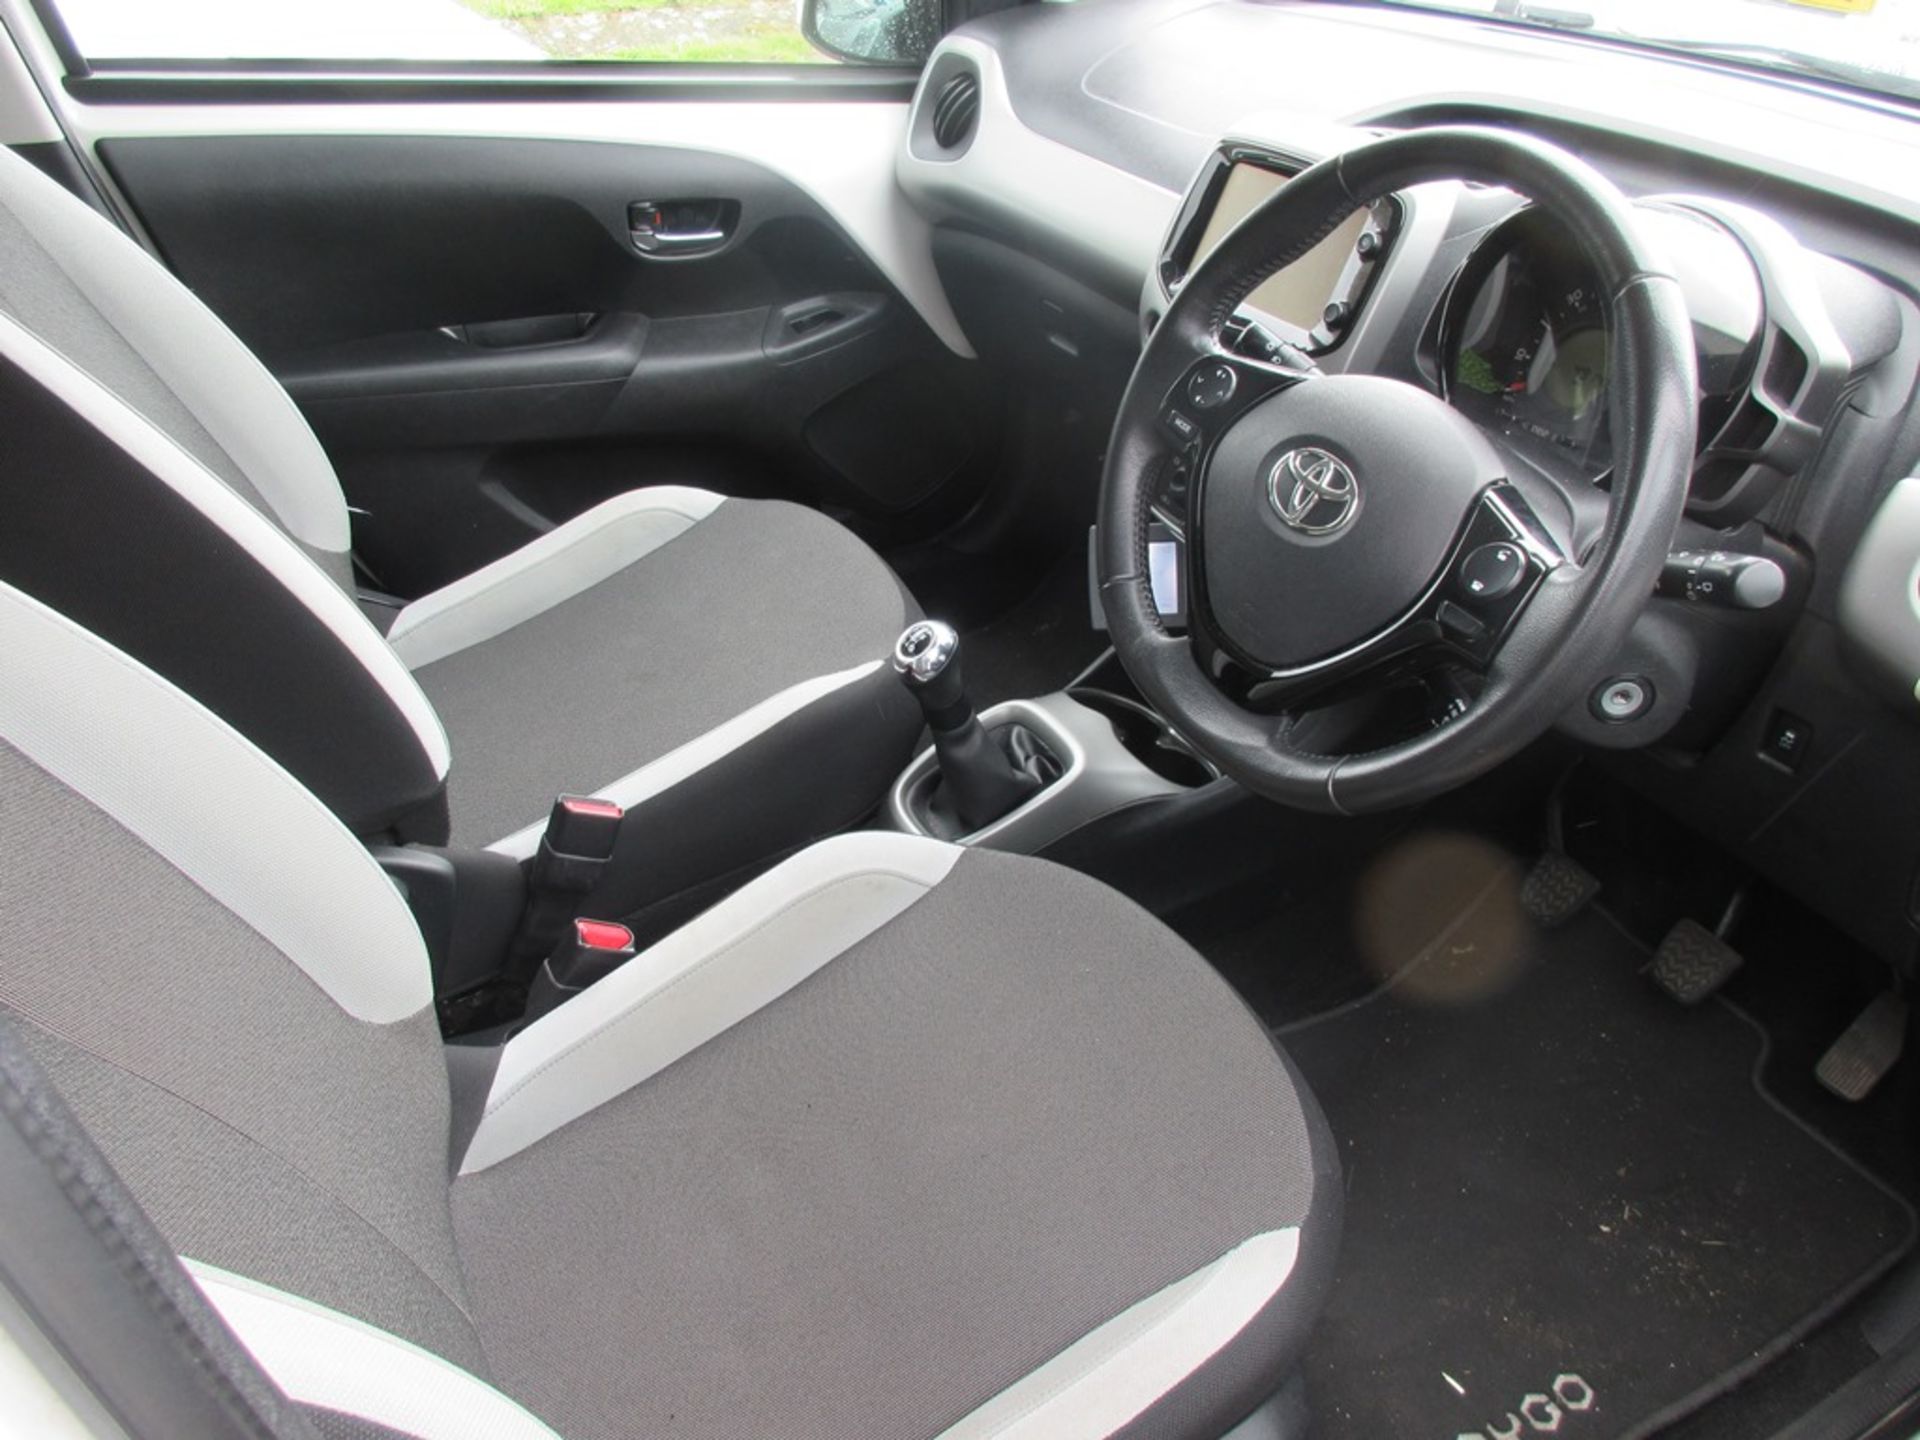 Toyota Aygo X-Play Vvt-I petrol hatchback, 67bhp Registration: WA66 VEK Recorded mileage: 49,140 - Image 12 of 14